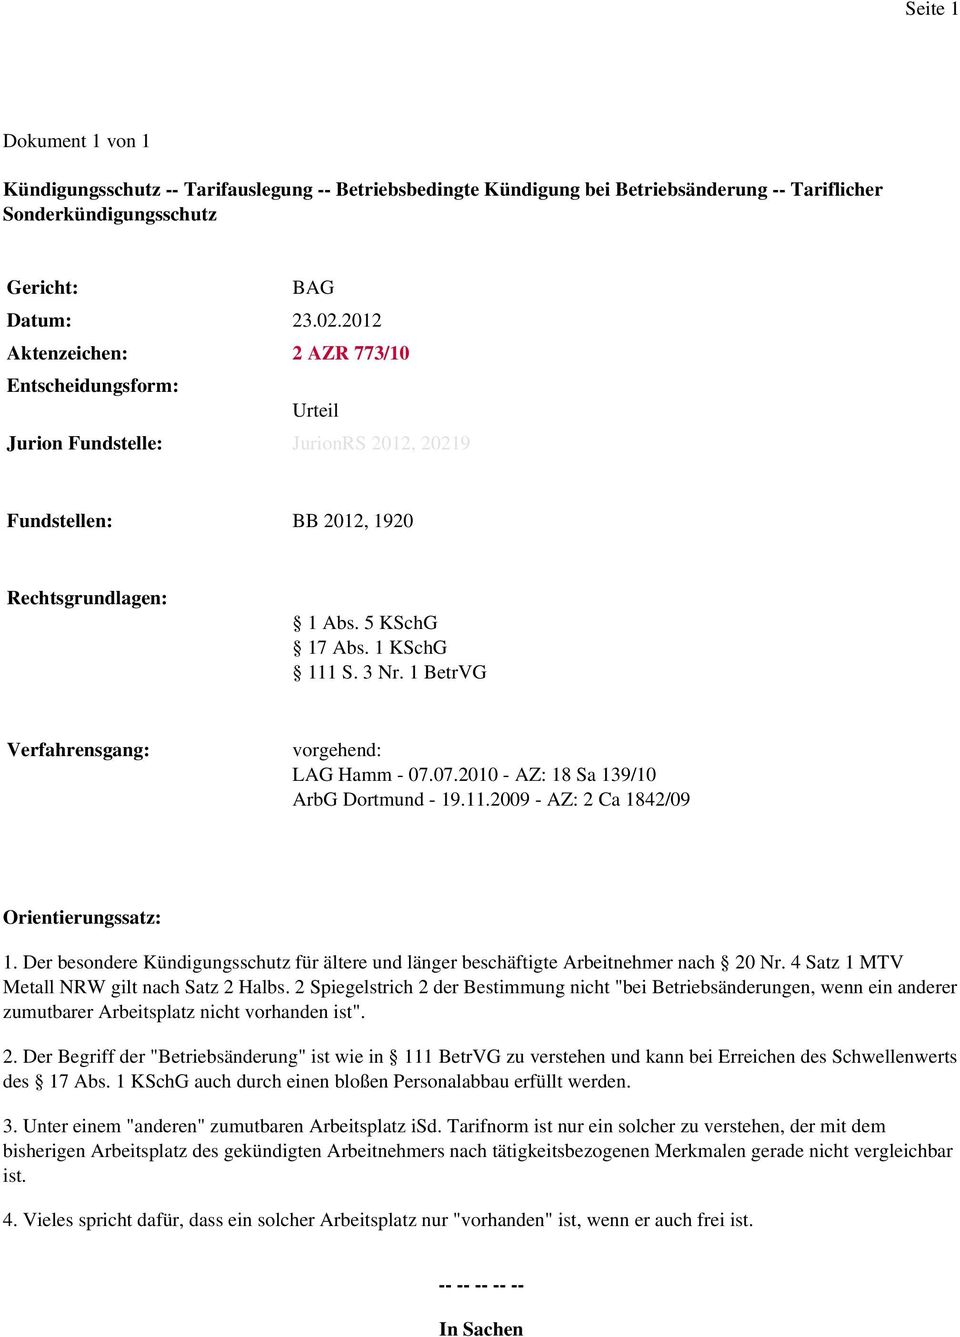 1 BetrVG Verfahrensgang: vorgehend: LAG Hamm - 07.07.2010 - AZ: 18 Sa 139/10 ArbG Dortmund - 19.11.2009 - AZ: 2 Ca 1842/09 Orientierungssatz: 1.